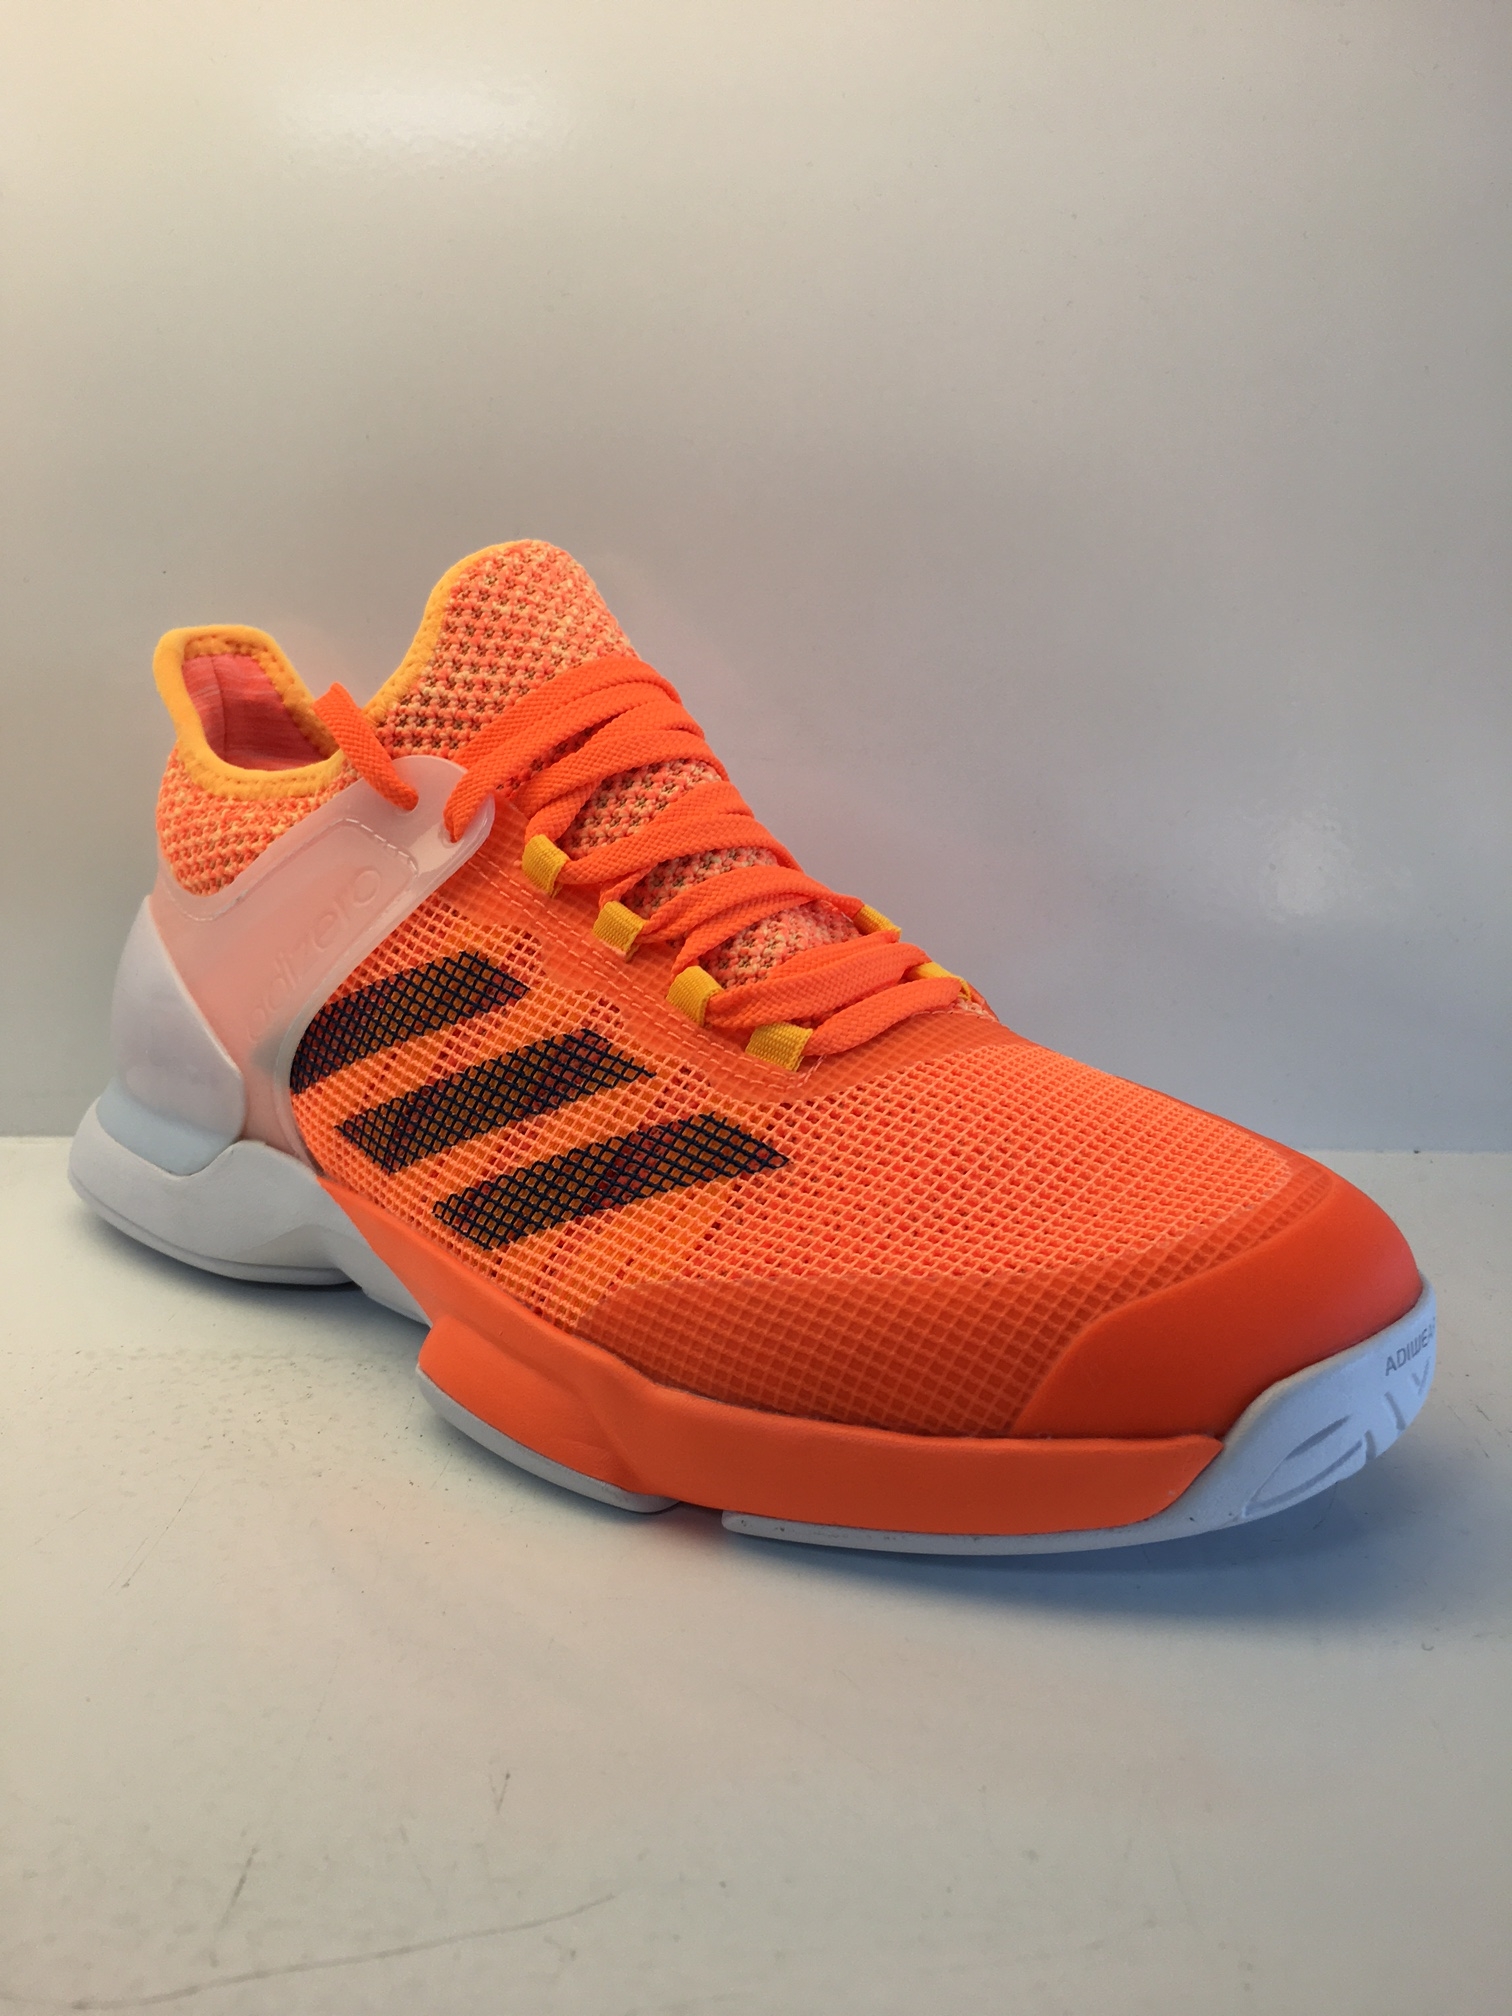 Footwear Review: Adidas Adizero Ubersonic 2 – First Serve Tennis